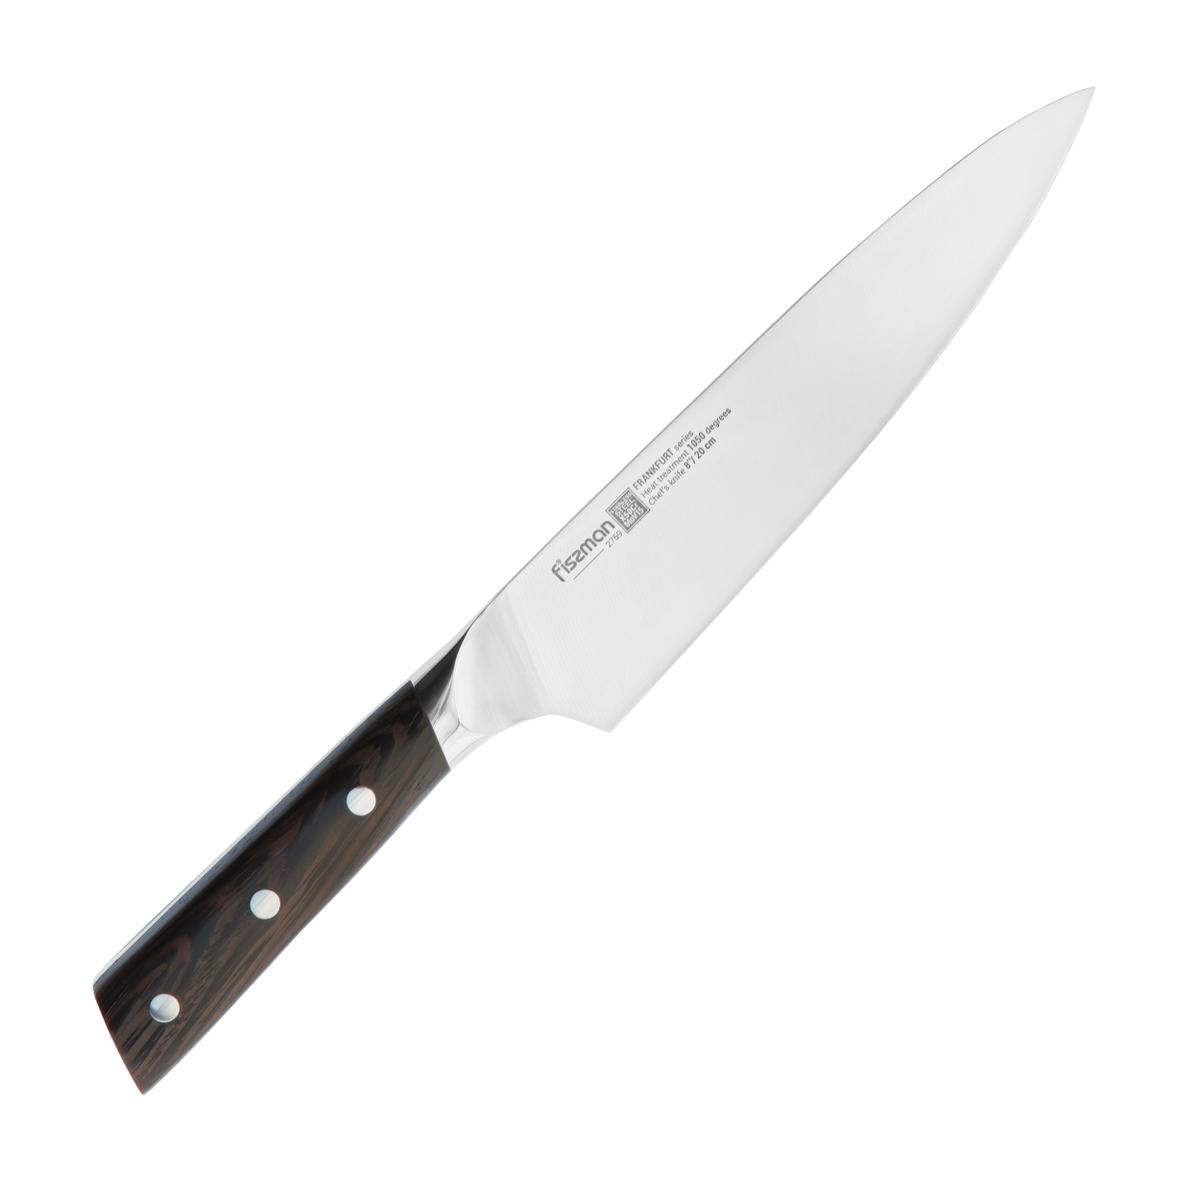 Fissman Frankfurt nóż szefa kuchni 20cm